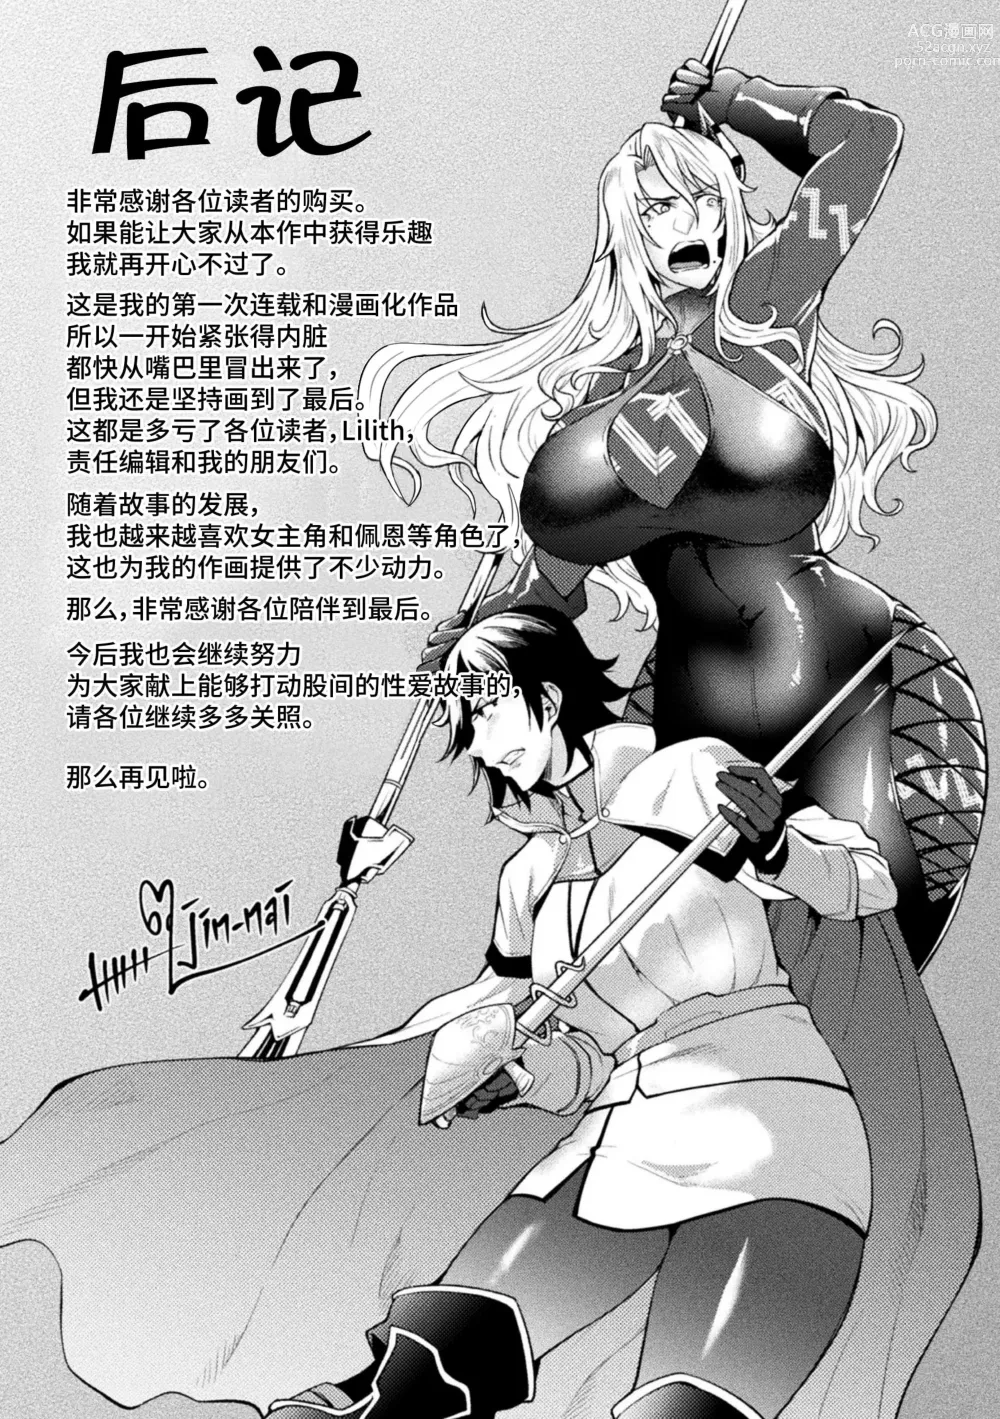 Page 181 of manga PRISON ACADEMIA THE COMIC